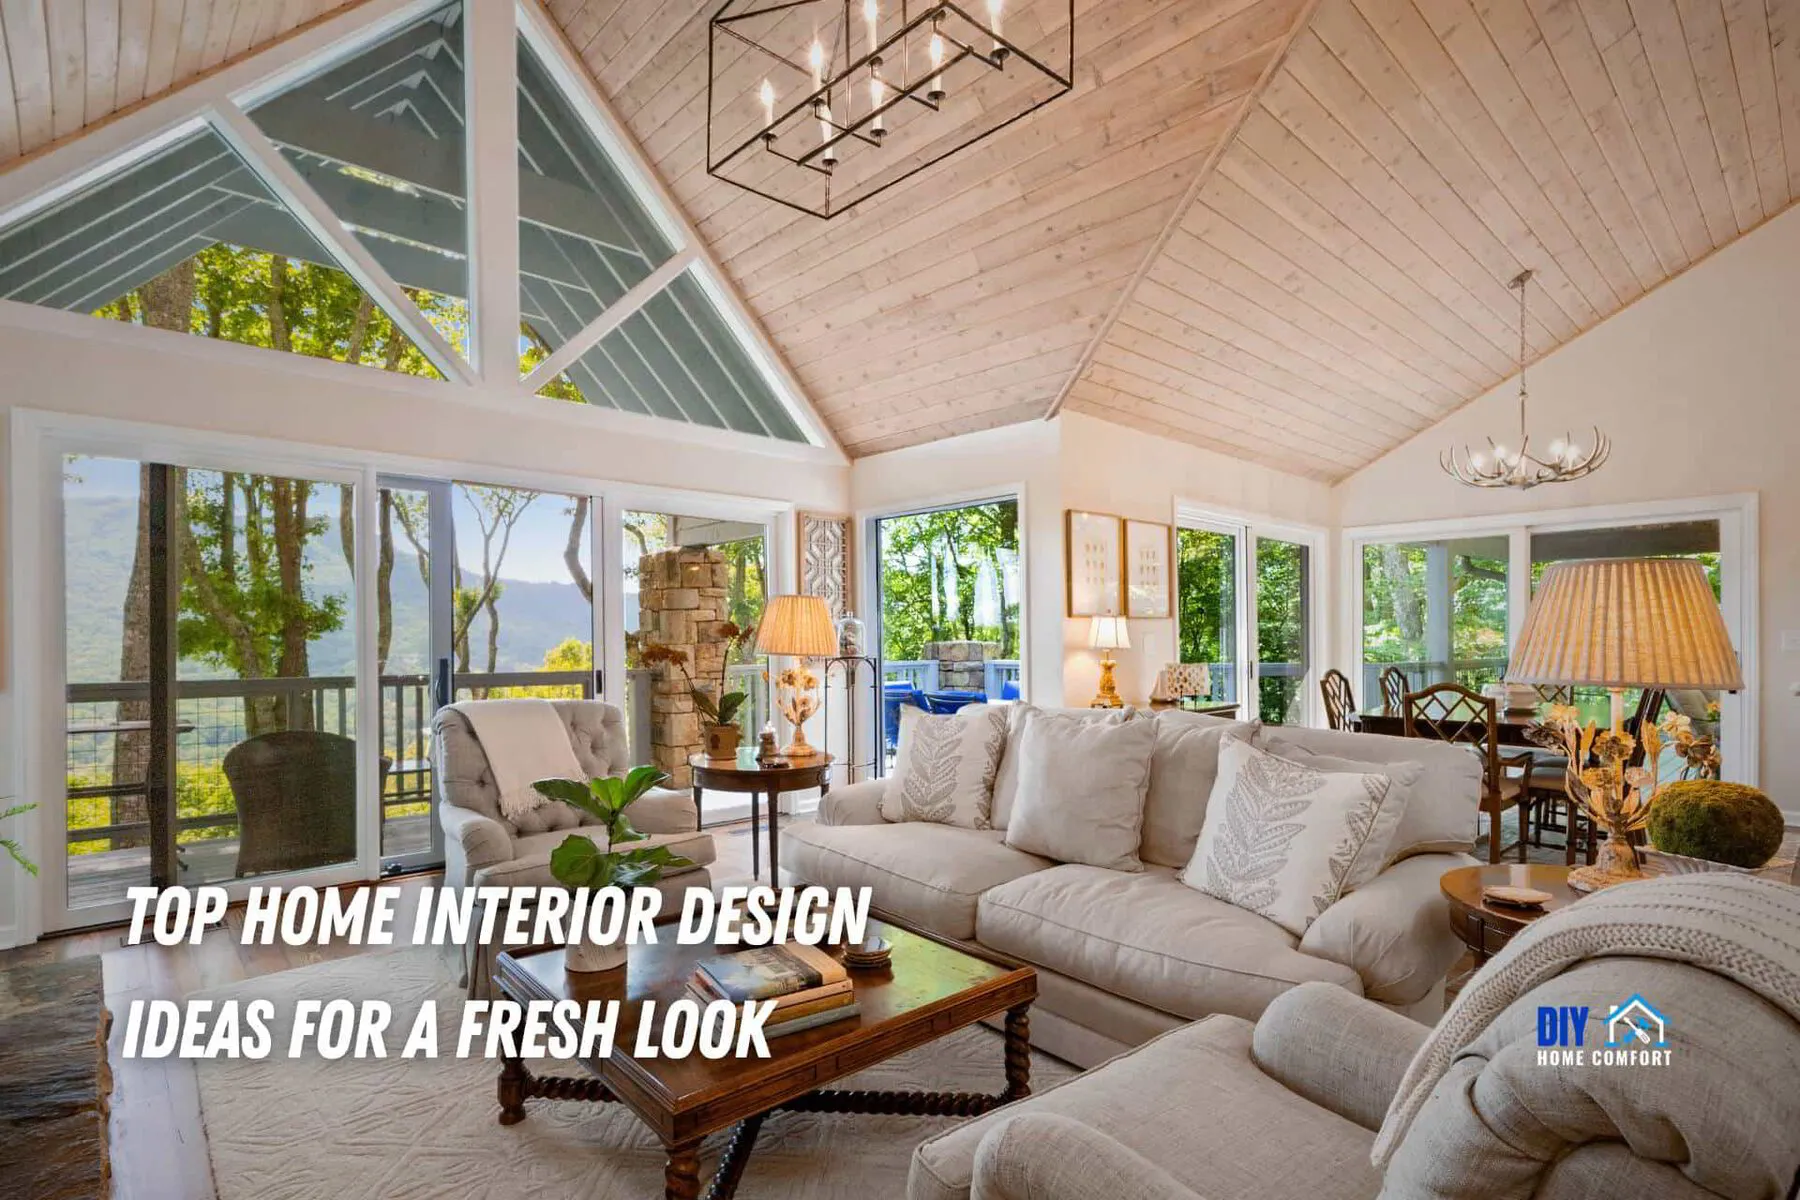 Top 30 Home Interior Design Ideas For A Fresh Look | DIY Home Comfort